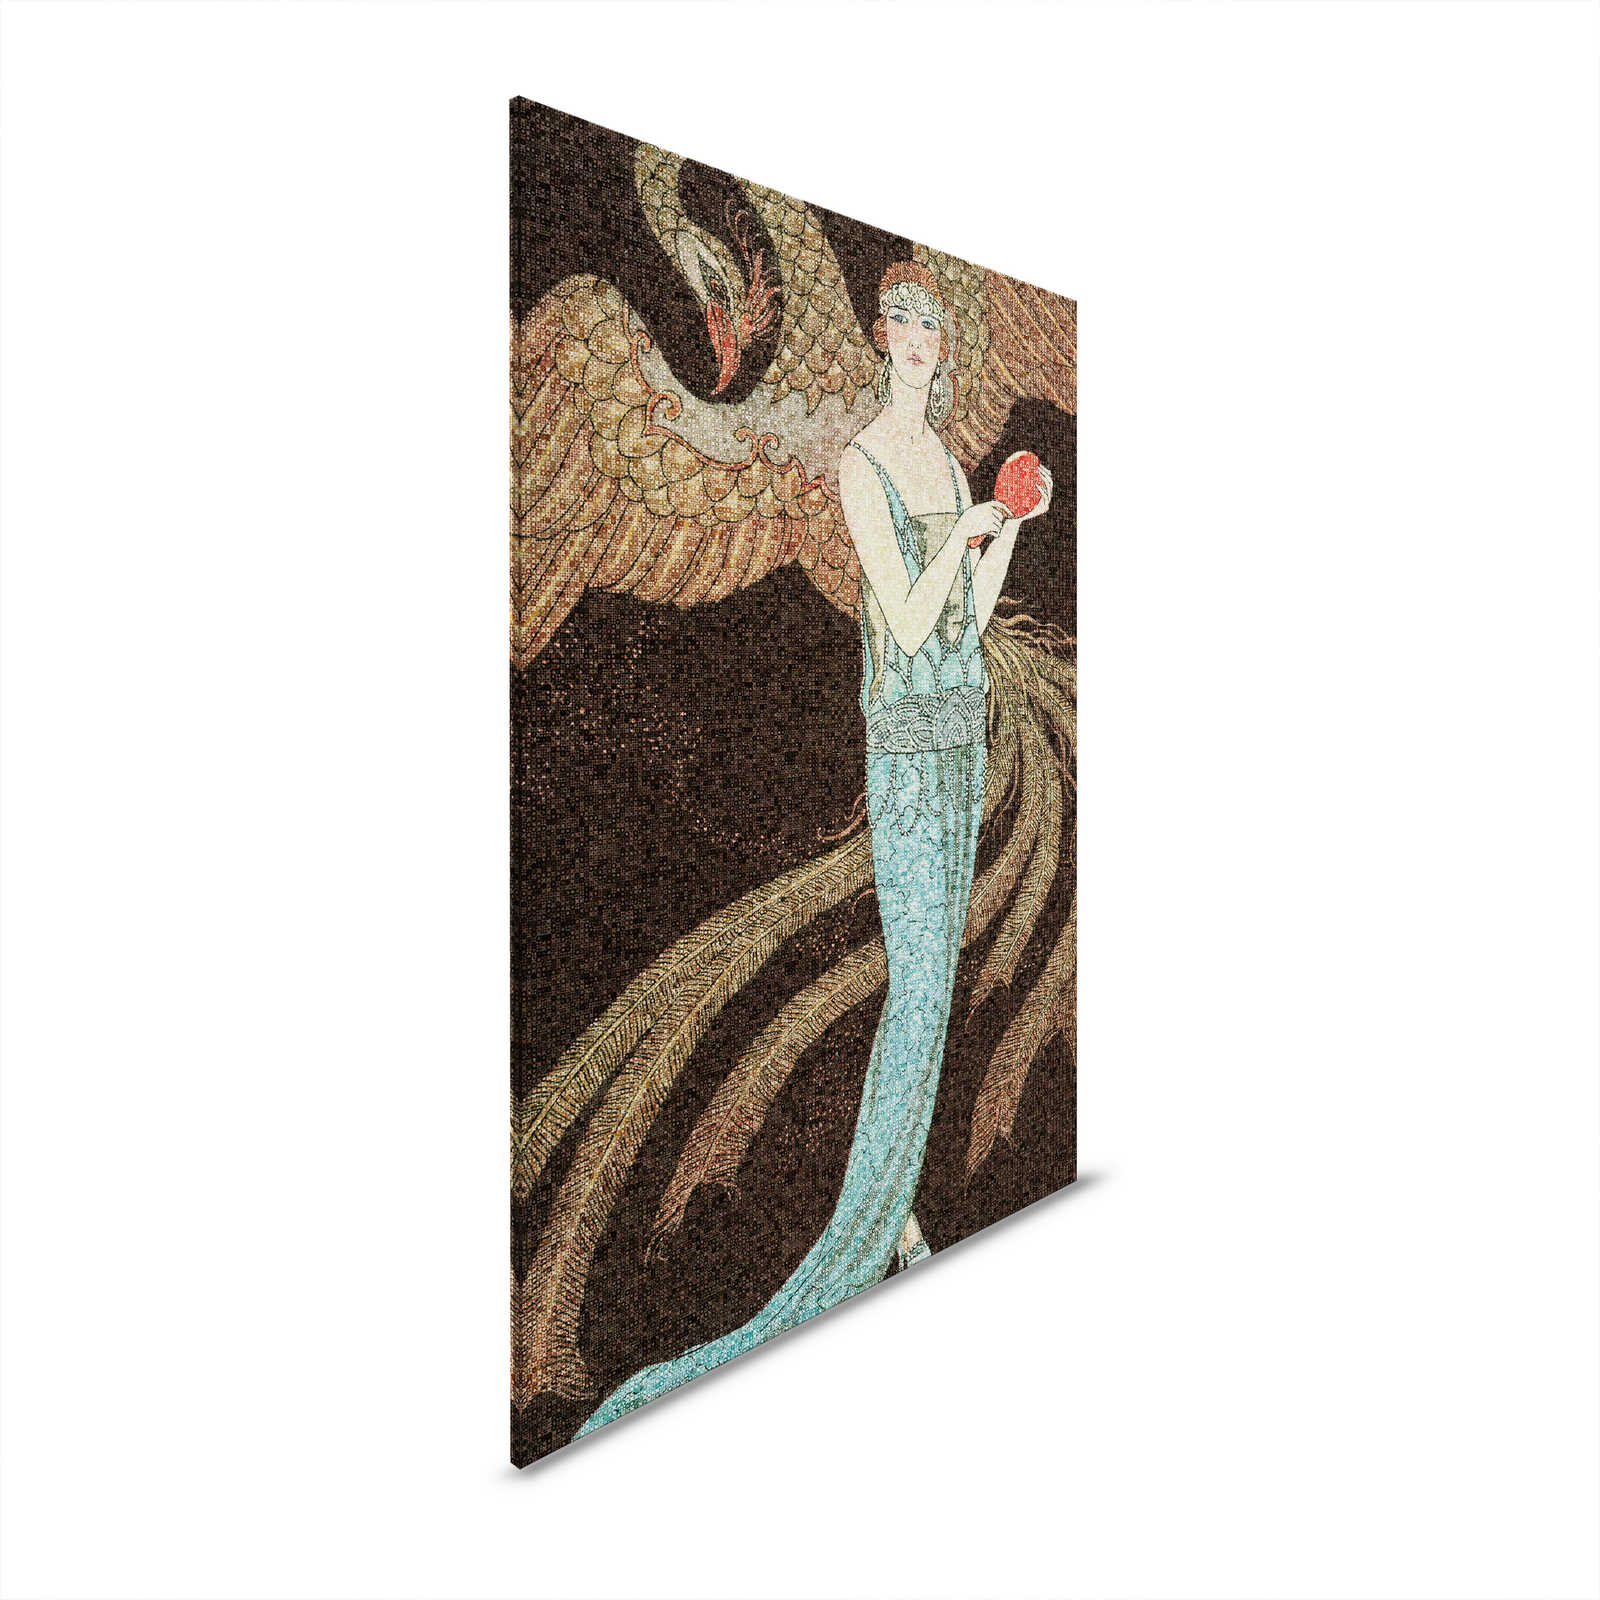 Scala 1 - Cuadro en lienzo Mosaico Fénix y Mujer motivo Art Déco - 0,80 m x 1,20 m
